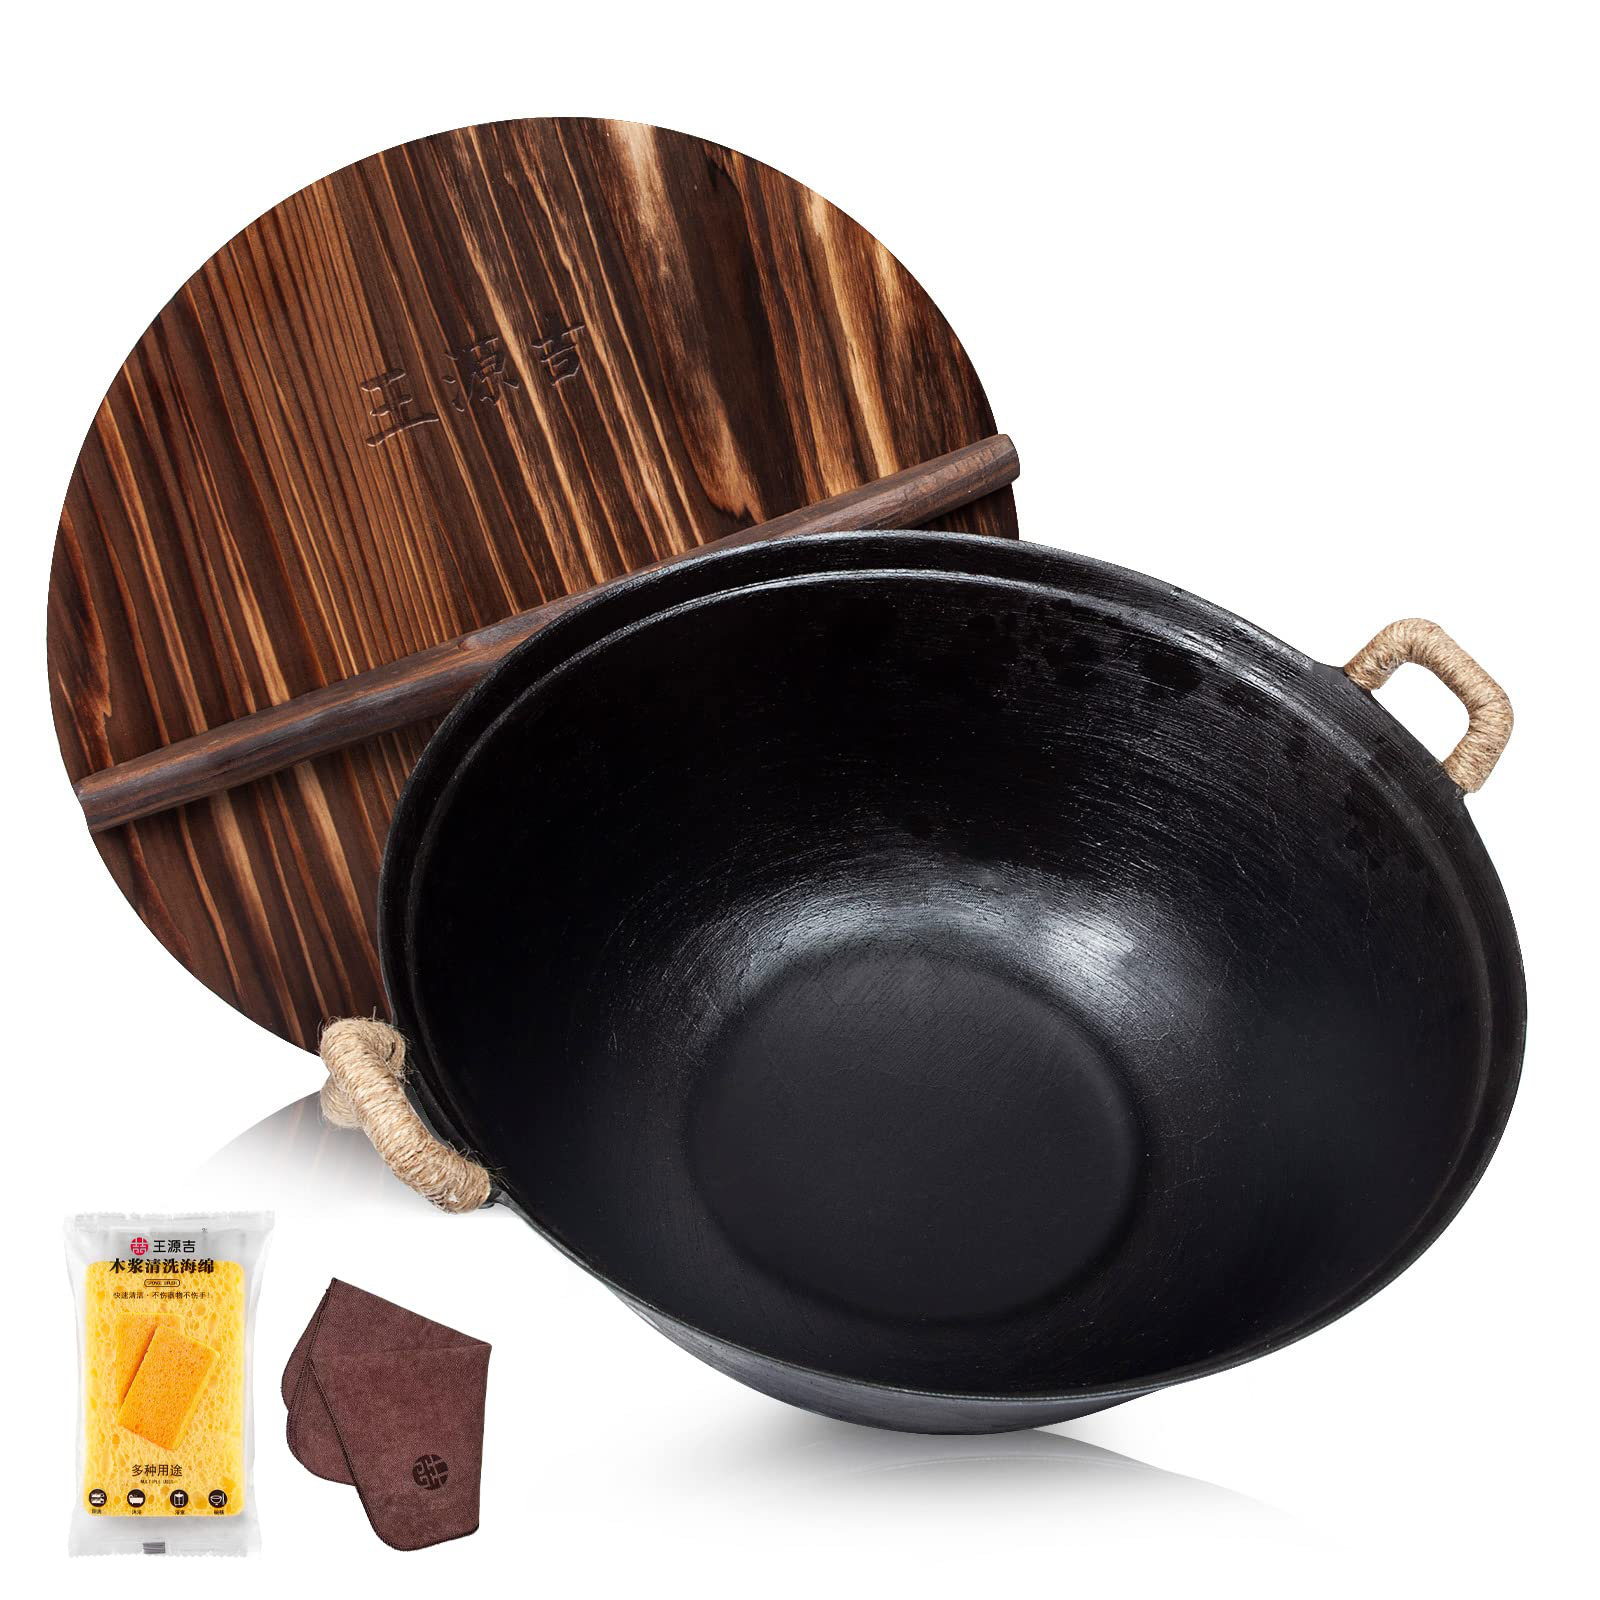 Bruntmor 14 Enameled Cast Iron Wok Nonstick Skillet Pan with Wooden Pot  Lid Cover - Black